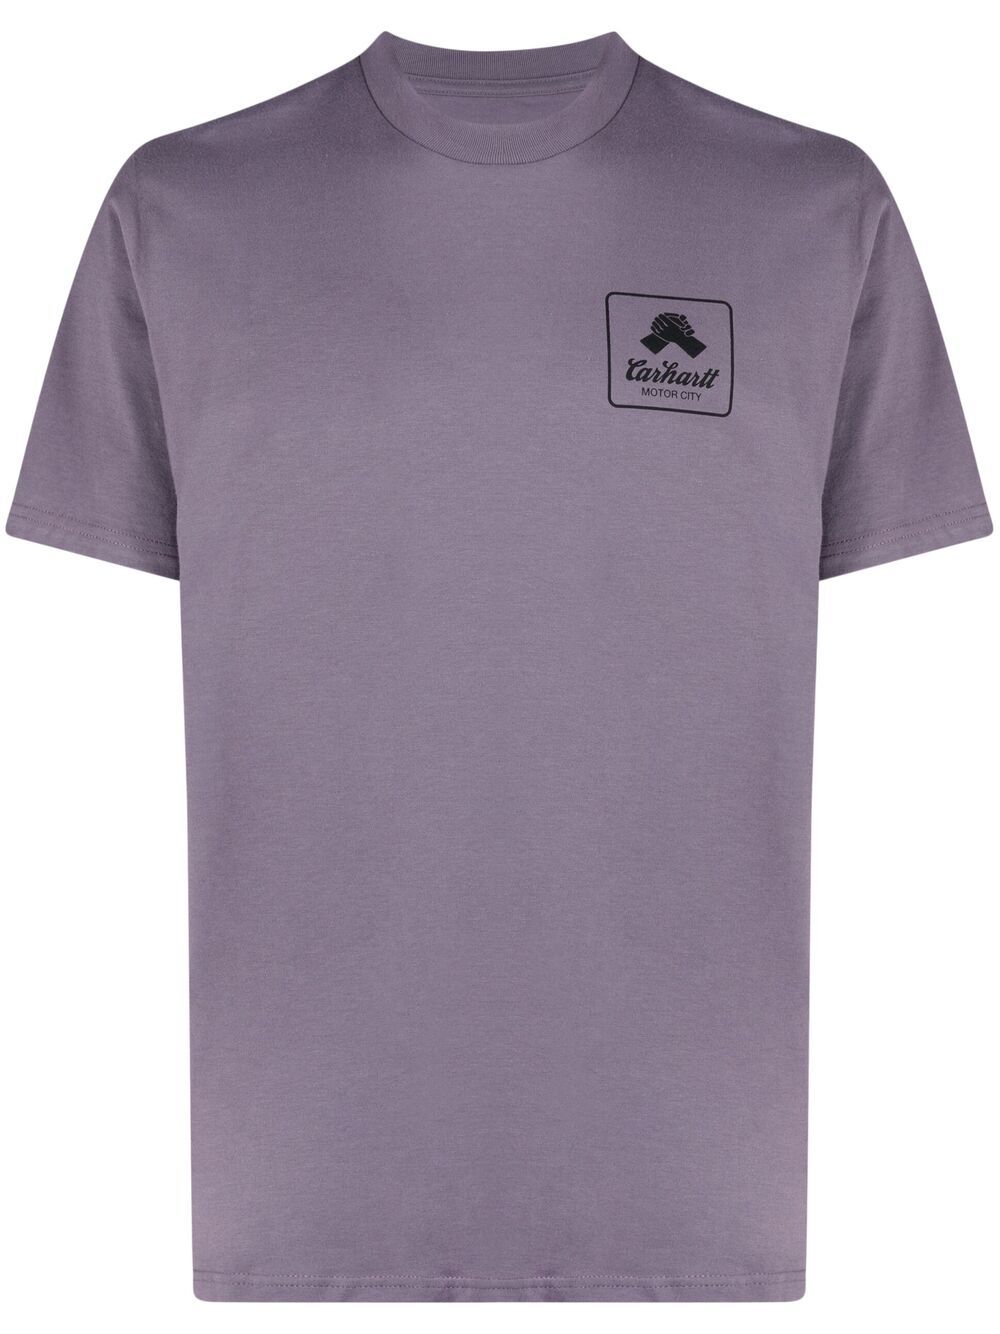 Carhartt Motor City T-shirt In Purple